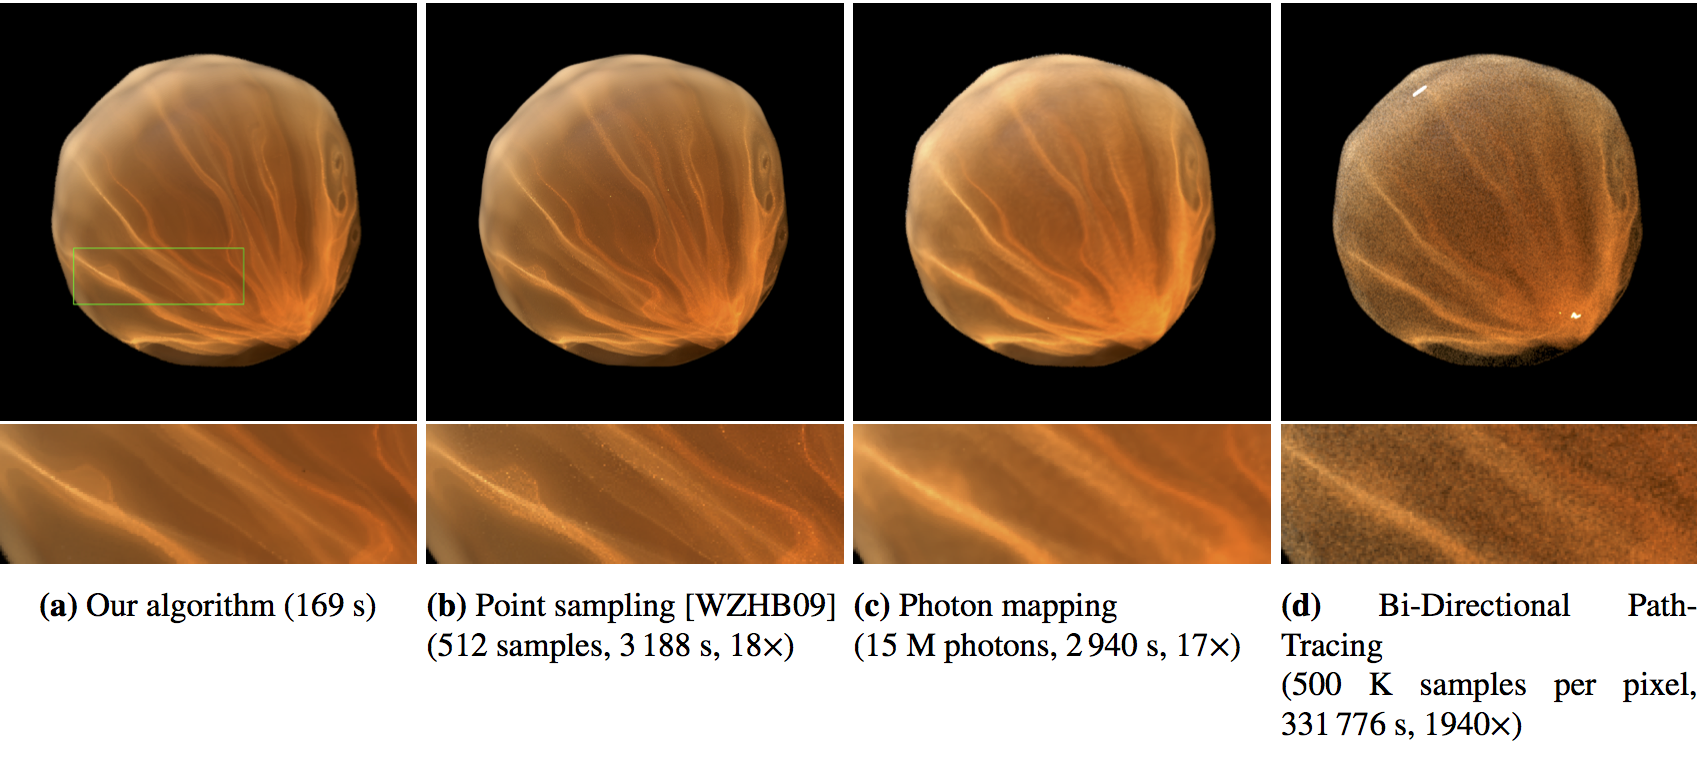 Bumpy sphere, comparison between algorithms